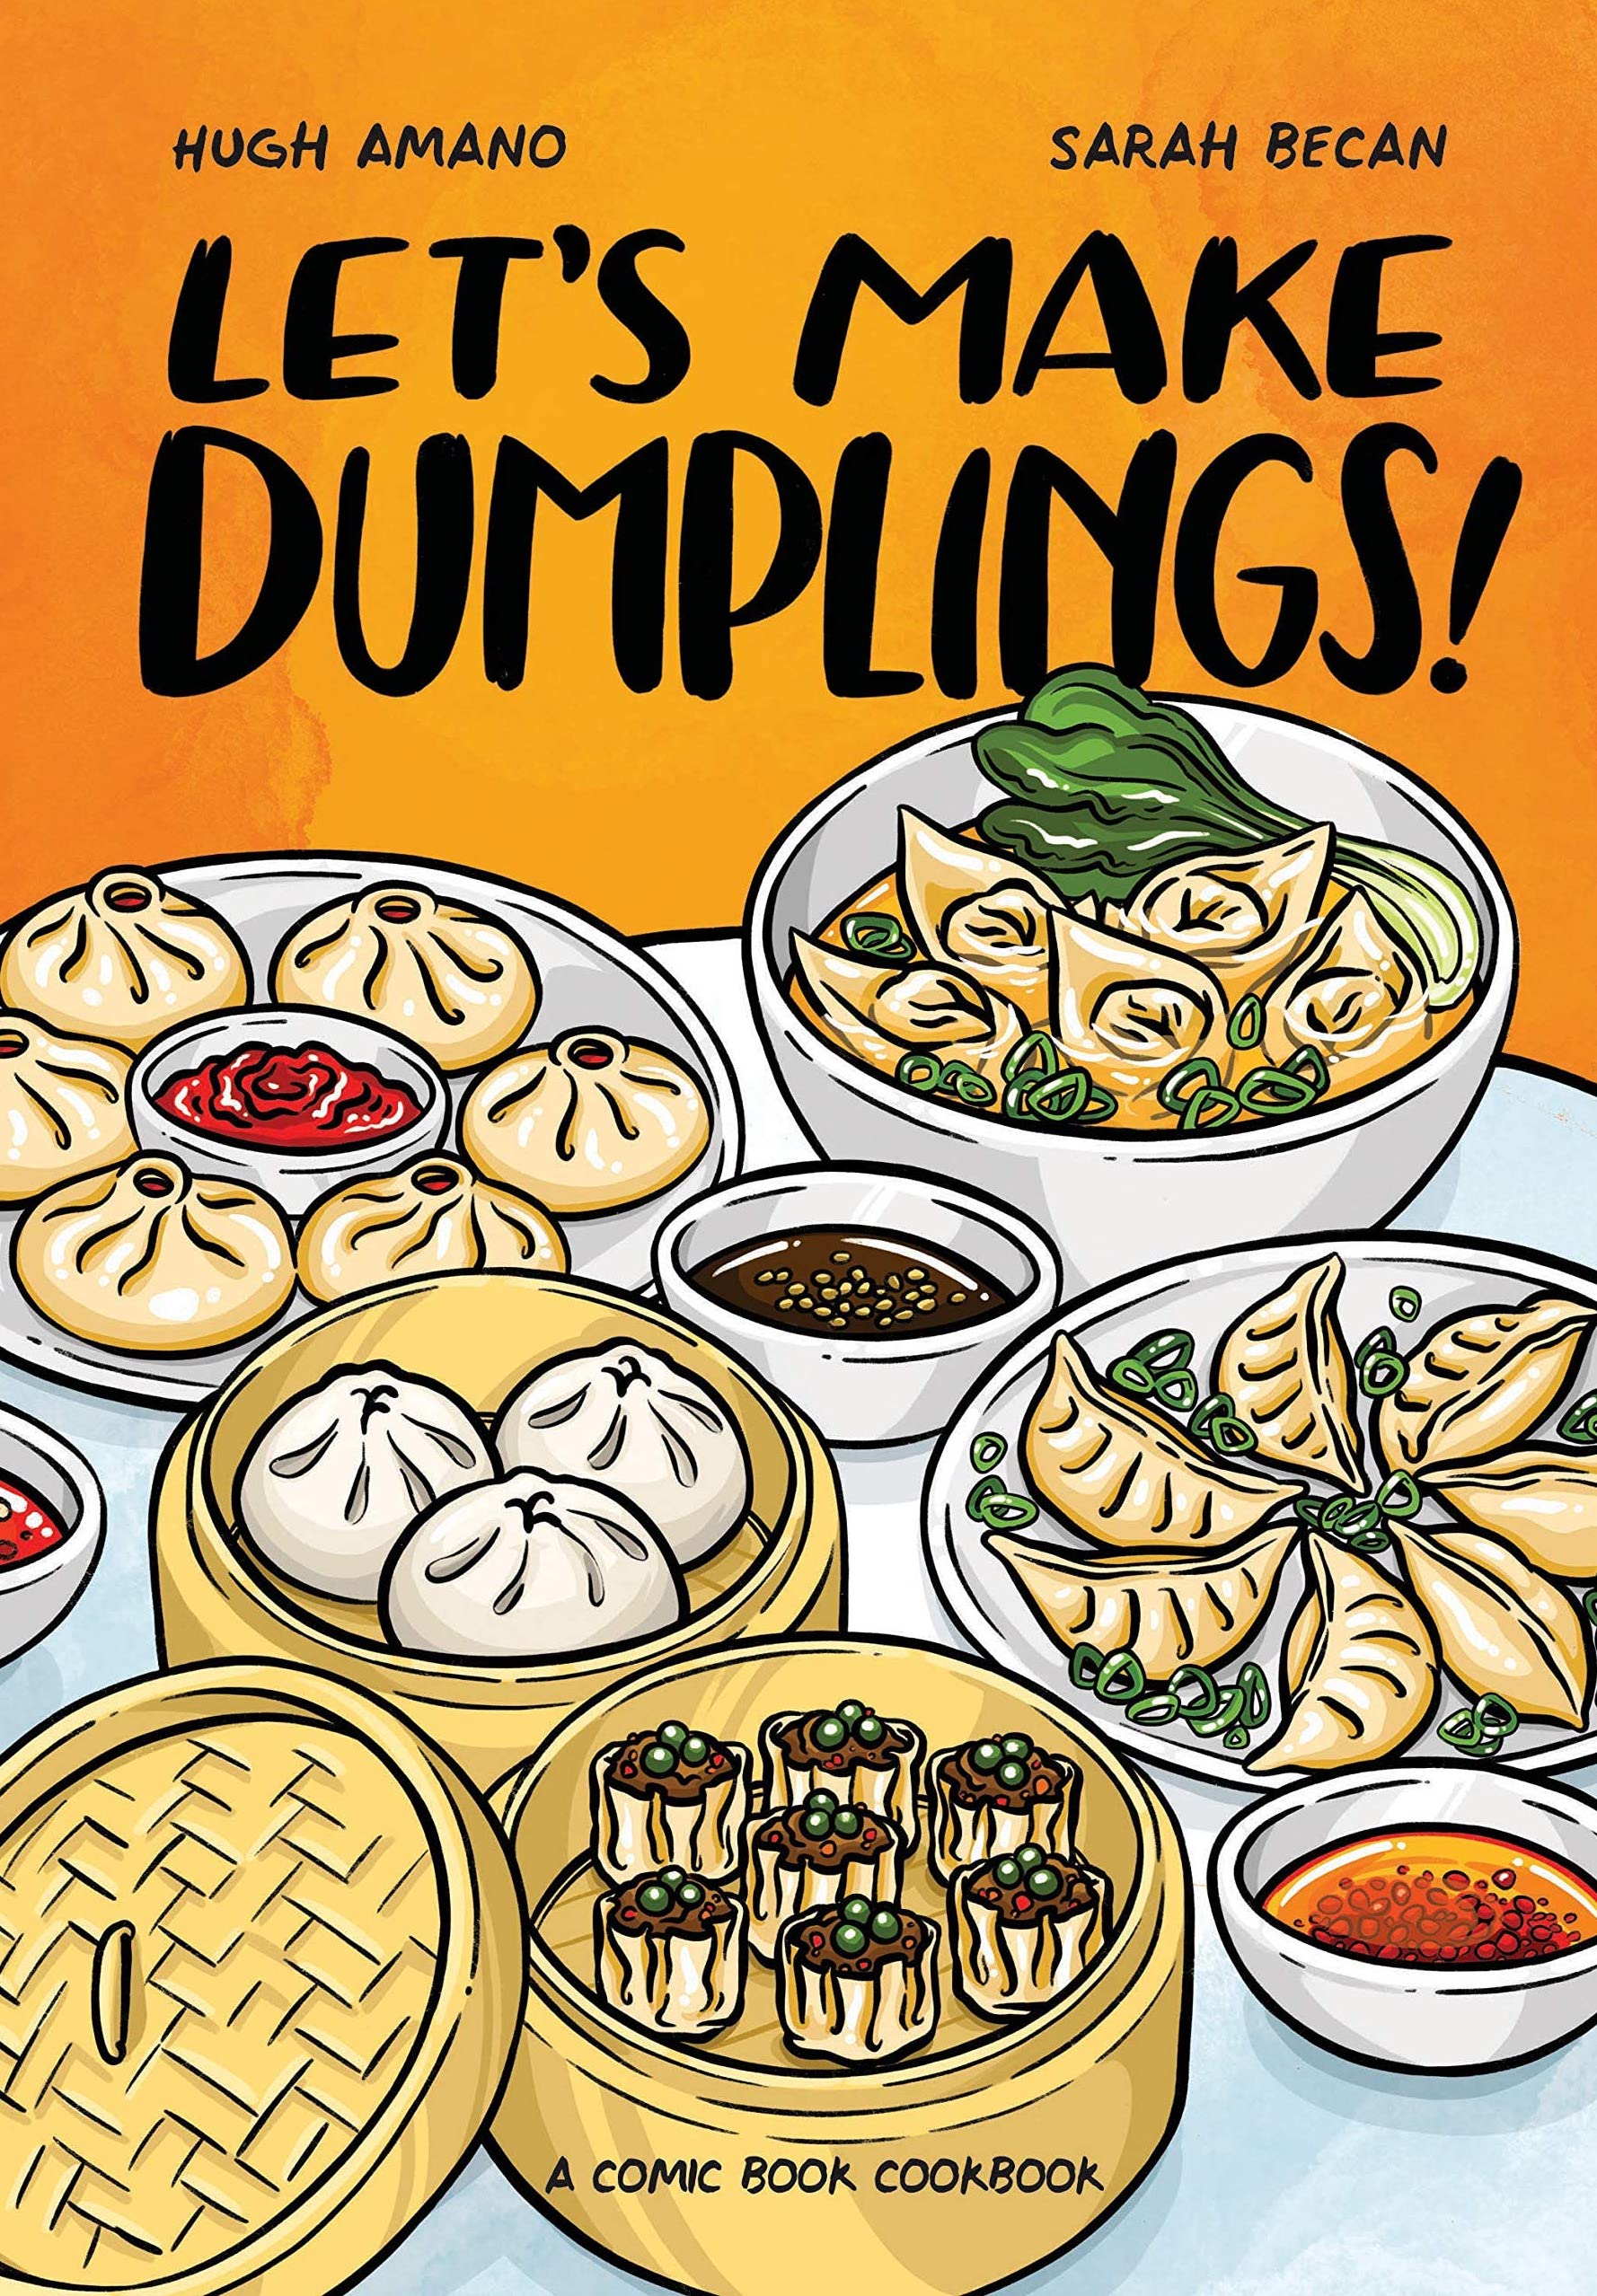 Let's Make Dumplings book cover